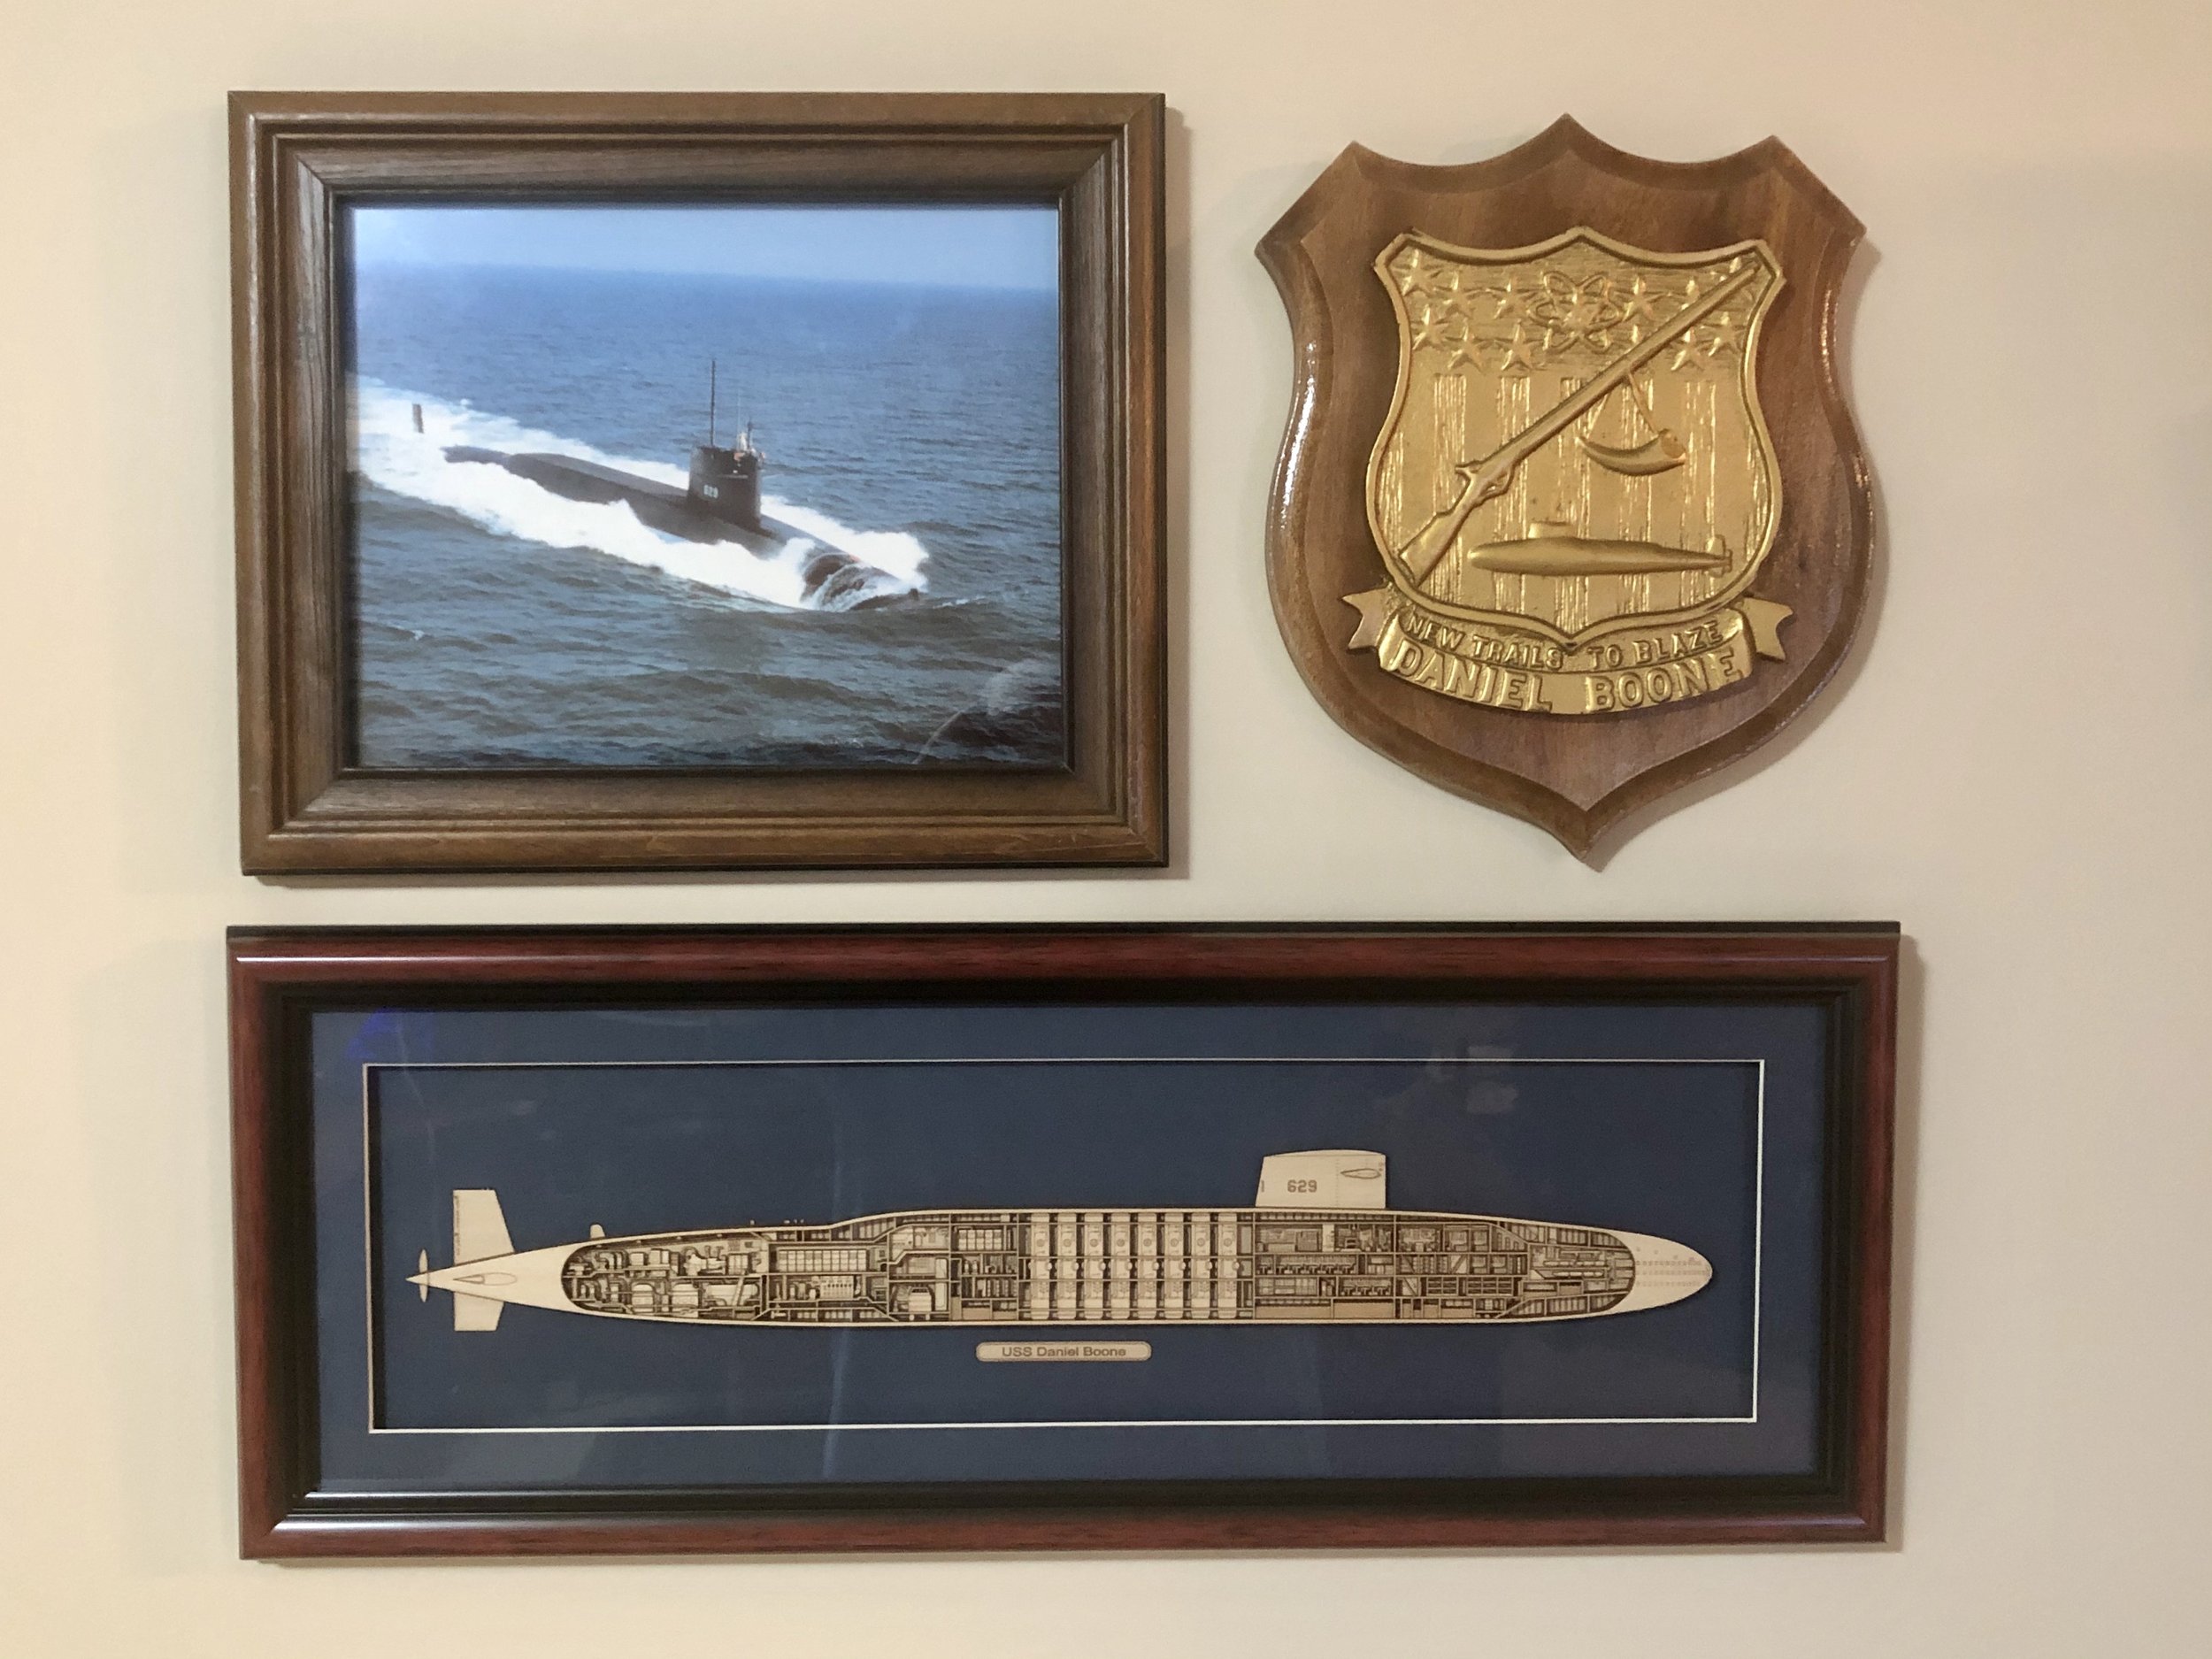  USS Daniel Boone recognition. 